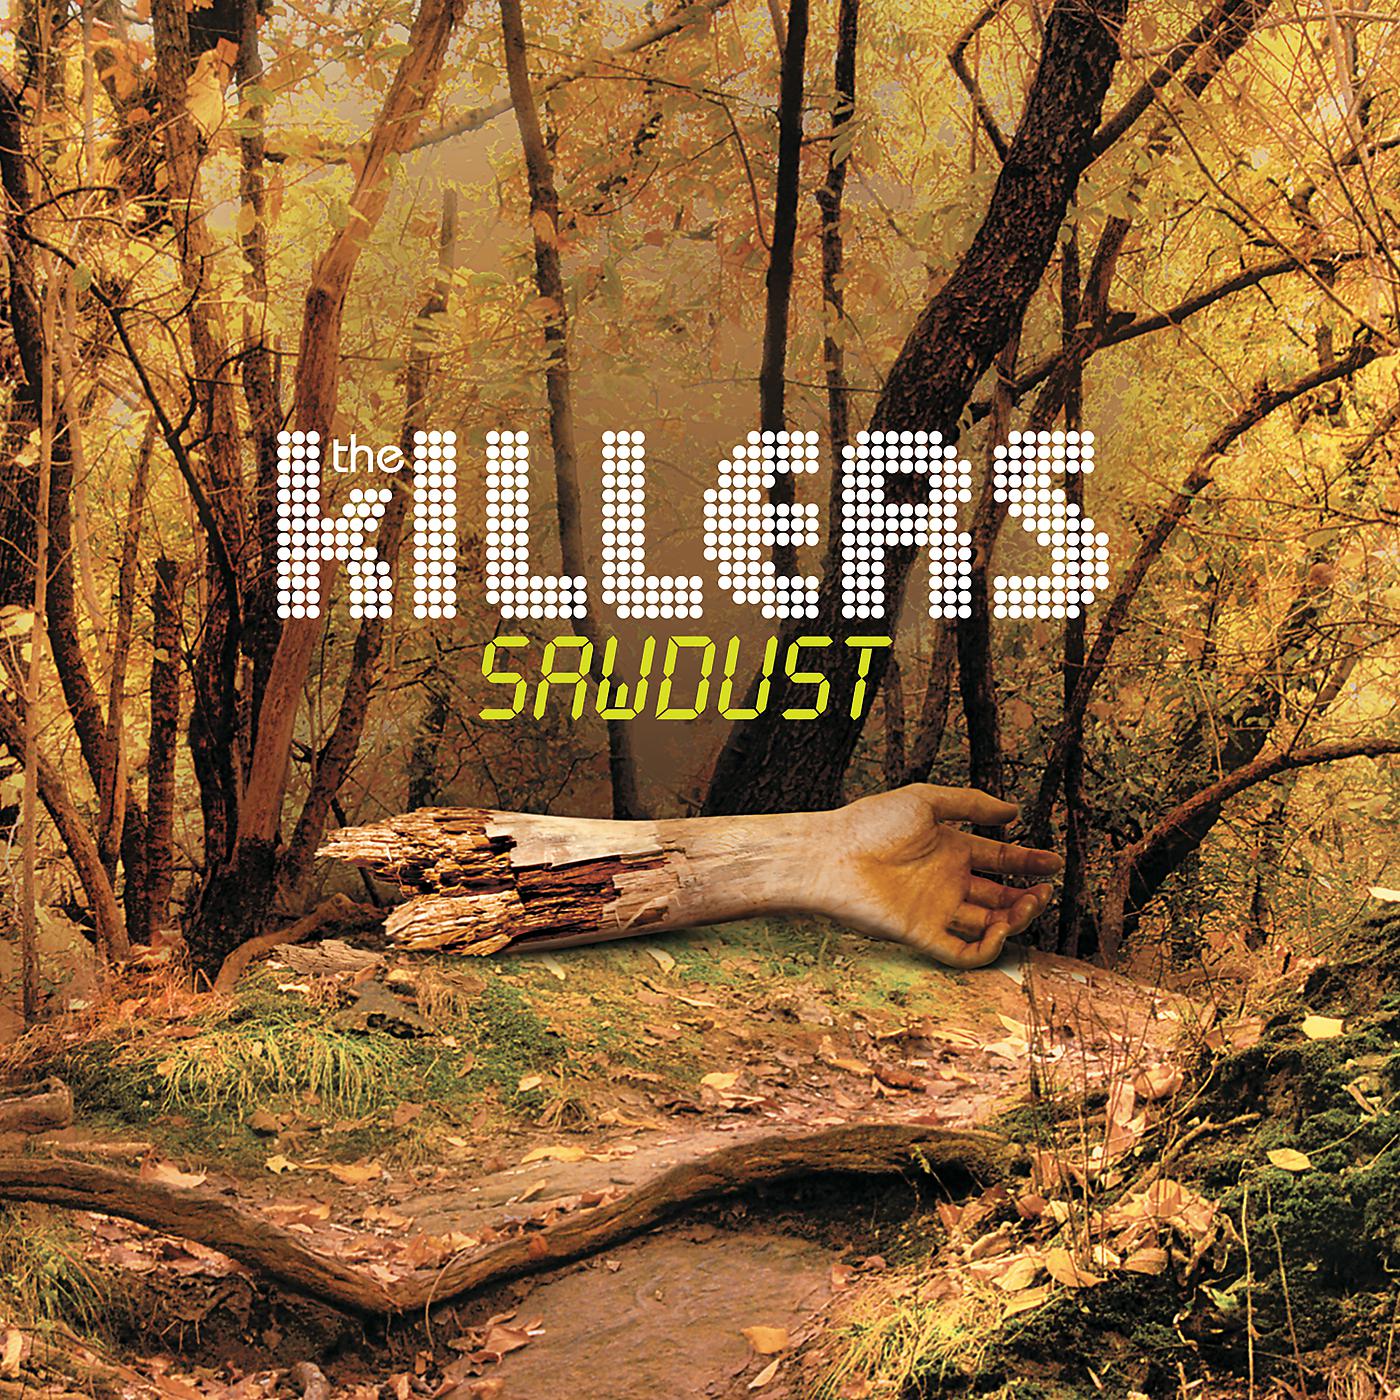 Killers обложка. The Killers обложка. Killers "sawdust". The Killers альбомы. The Killers обложки альбомов.